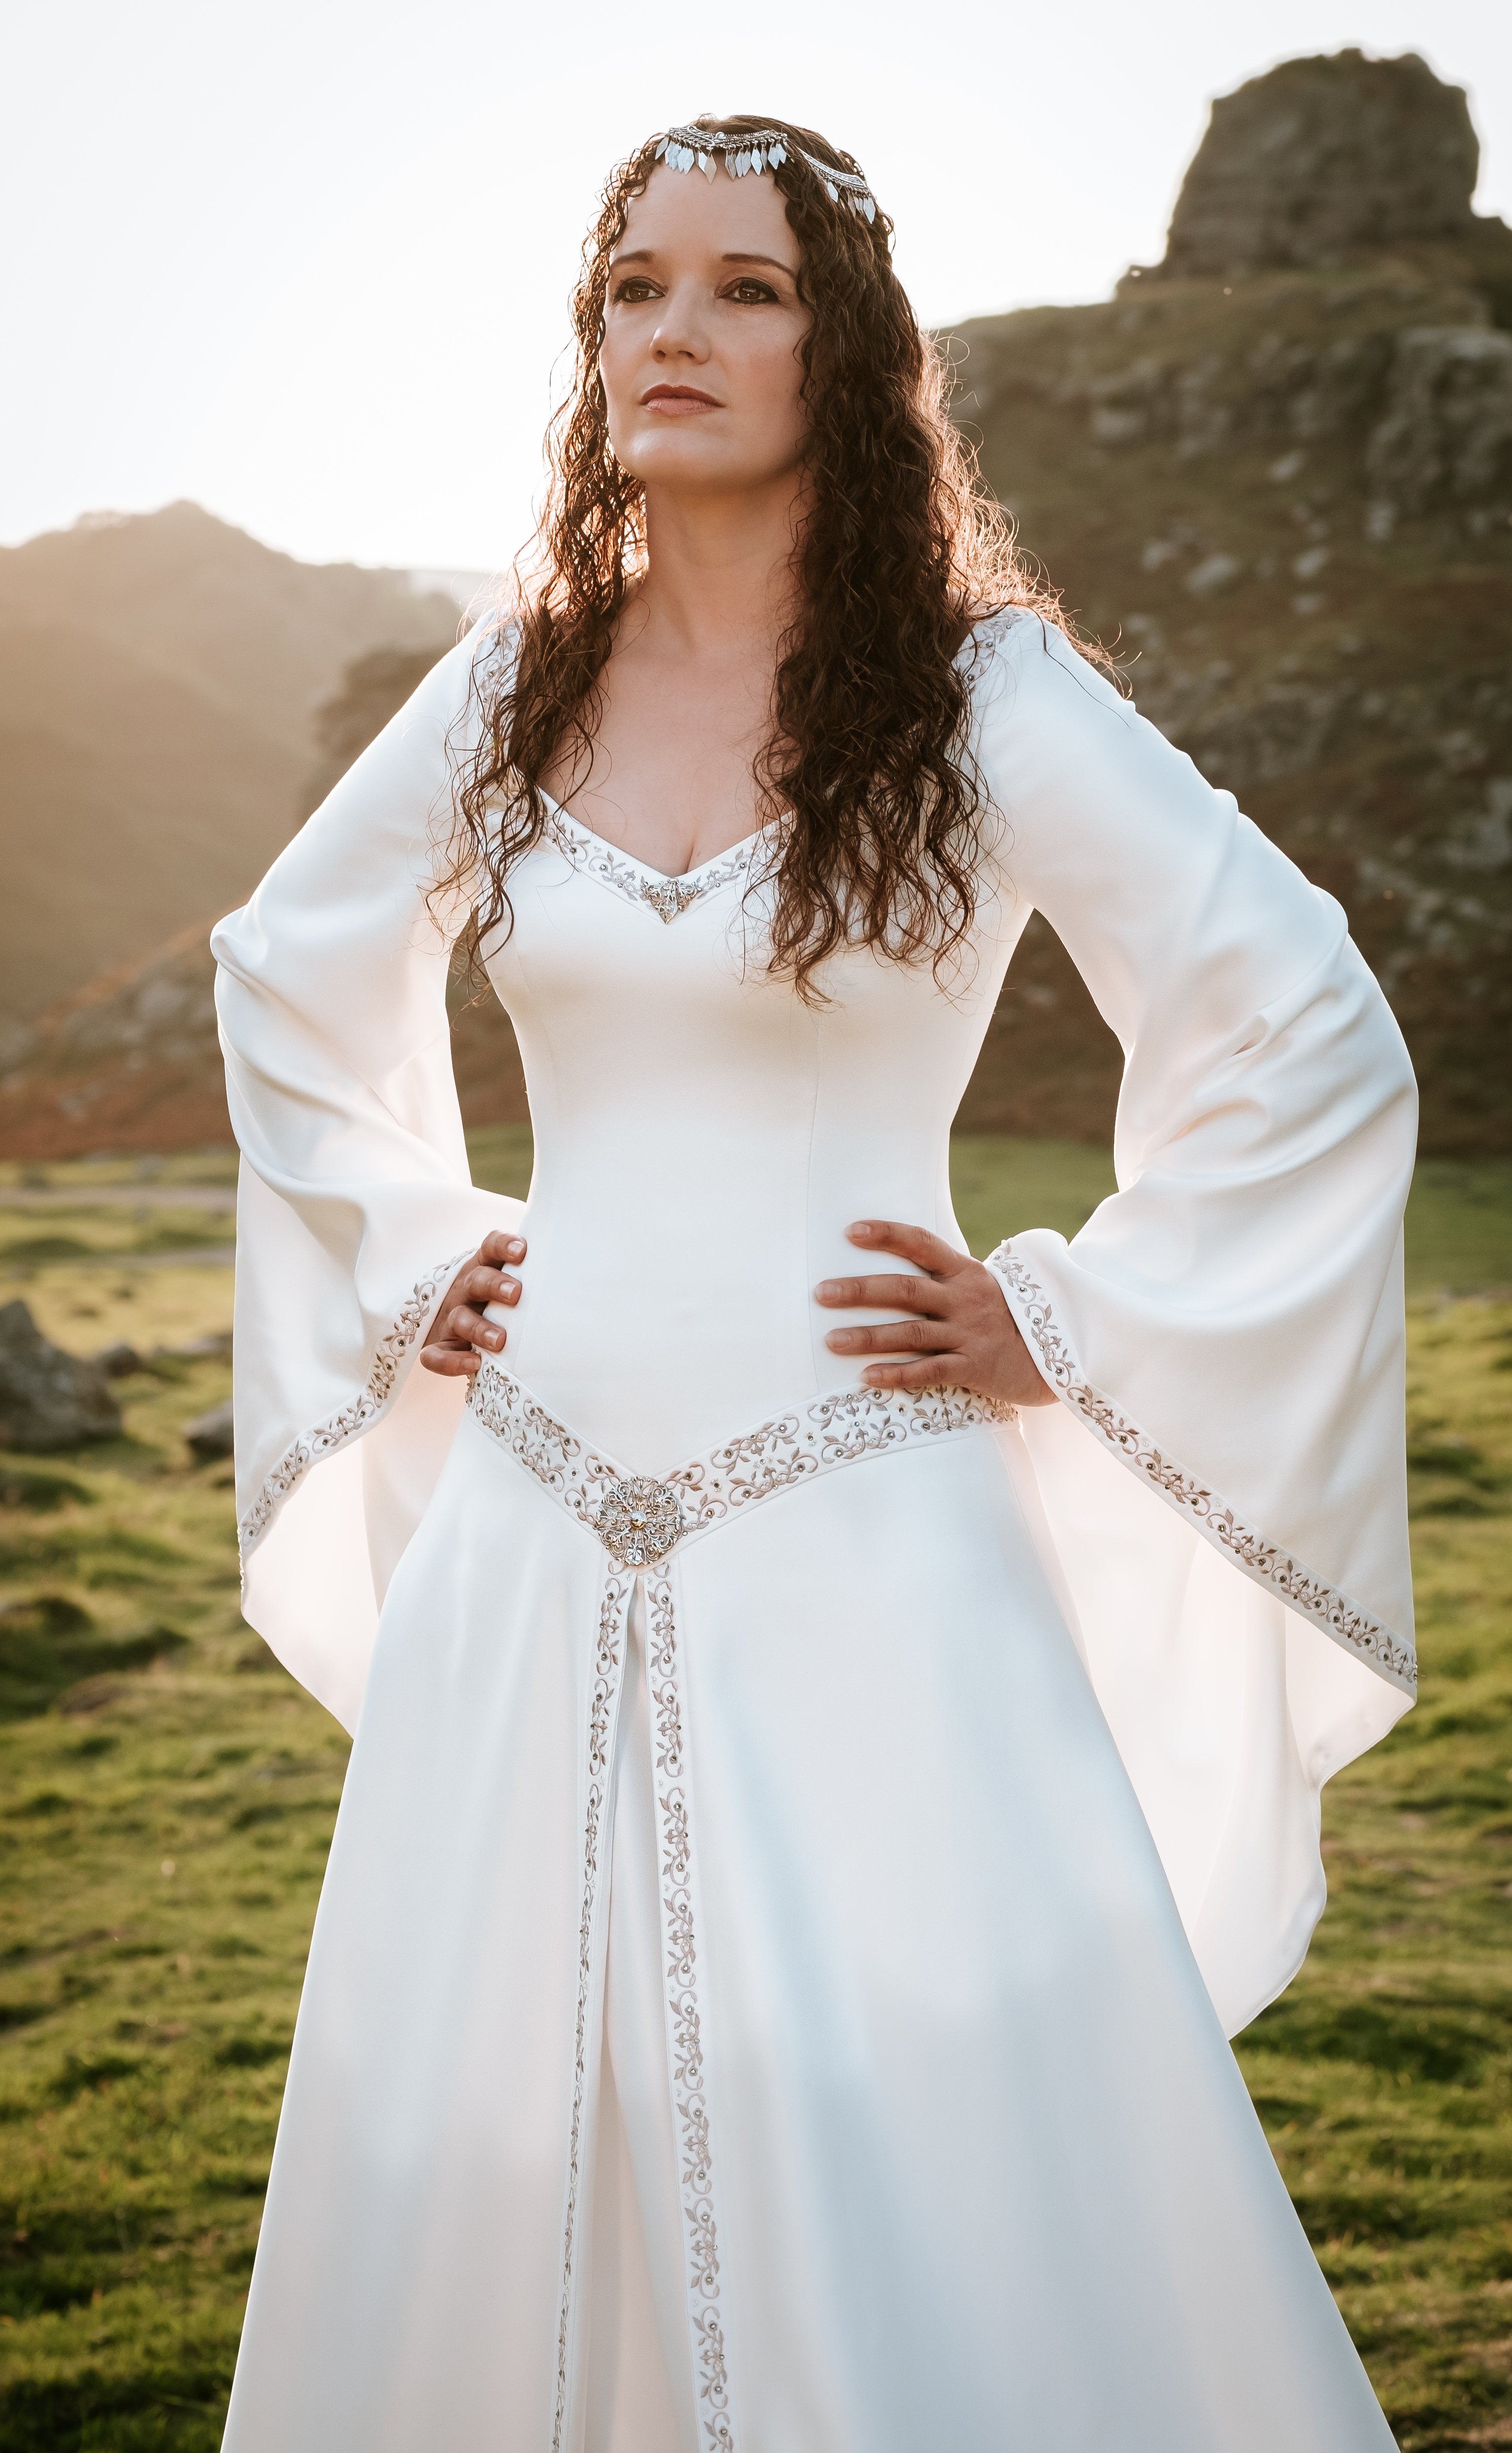 elven fairy wedding dress,medieval fantasy wedding dresses,elvish medieval wedding dress,medieval wedding dress,